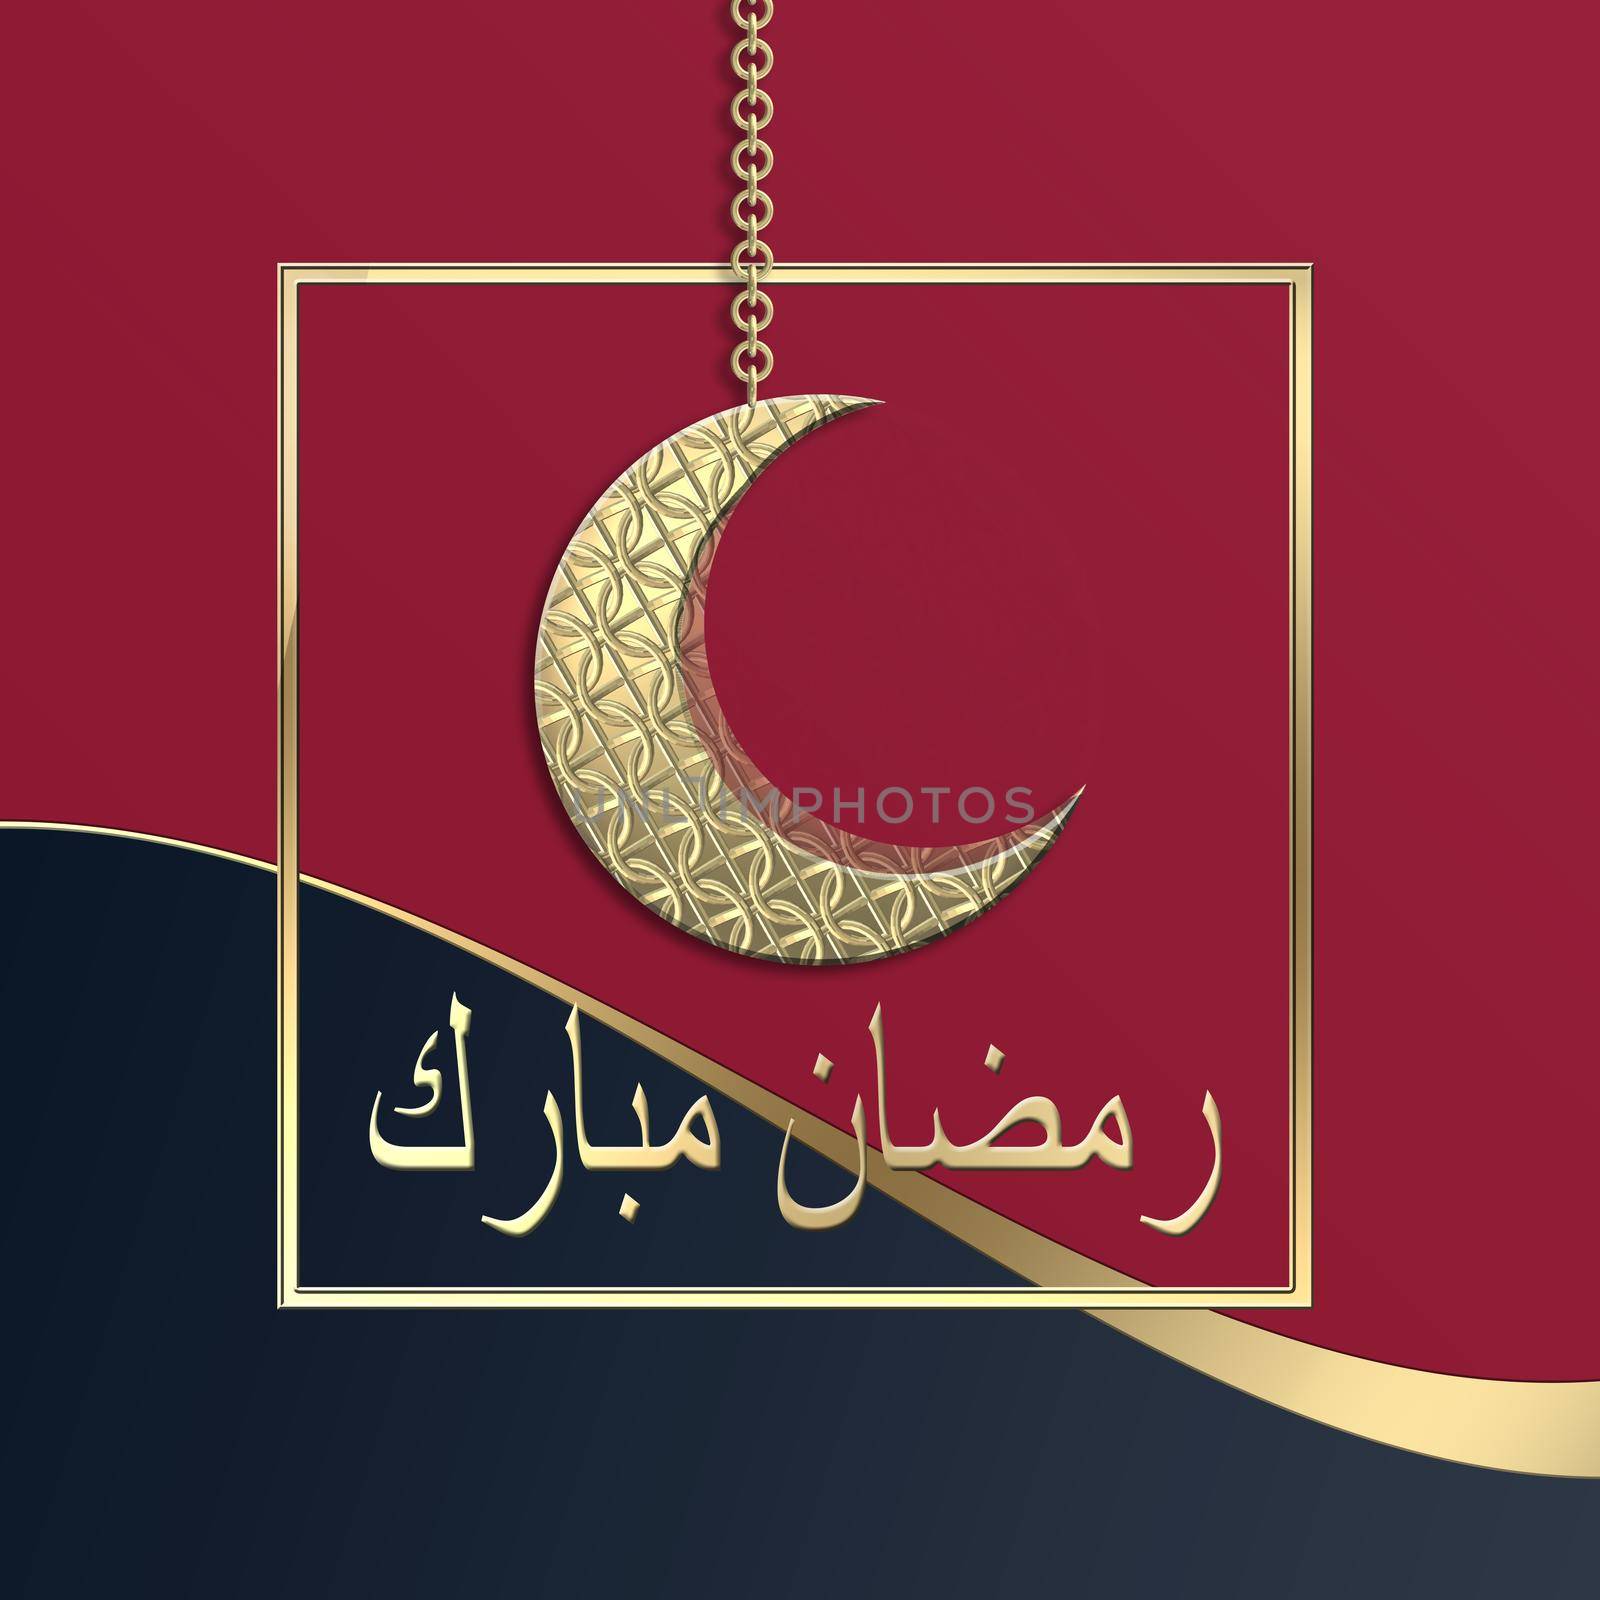 Crescent moon background for Ramadan celebration card. Ramadan greeting cards. Arabic text translation Happy Ramadan. 3d render